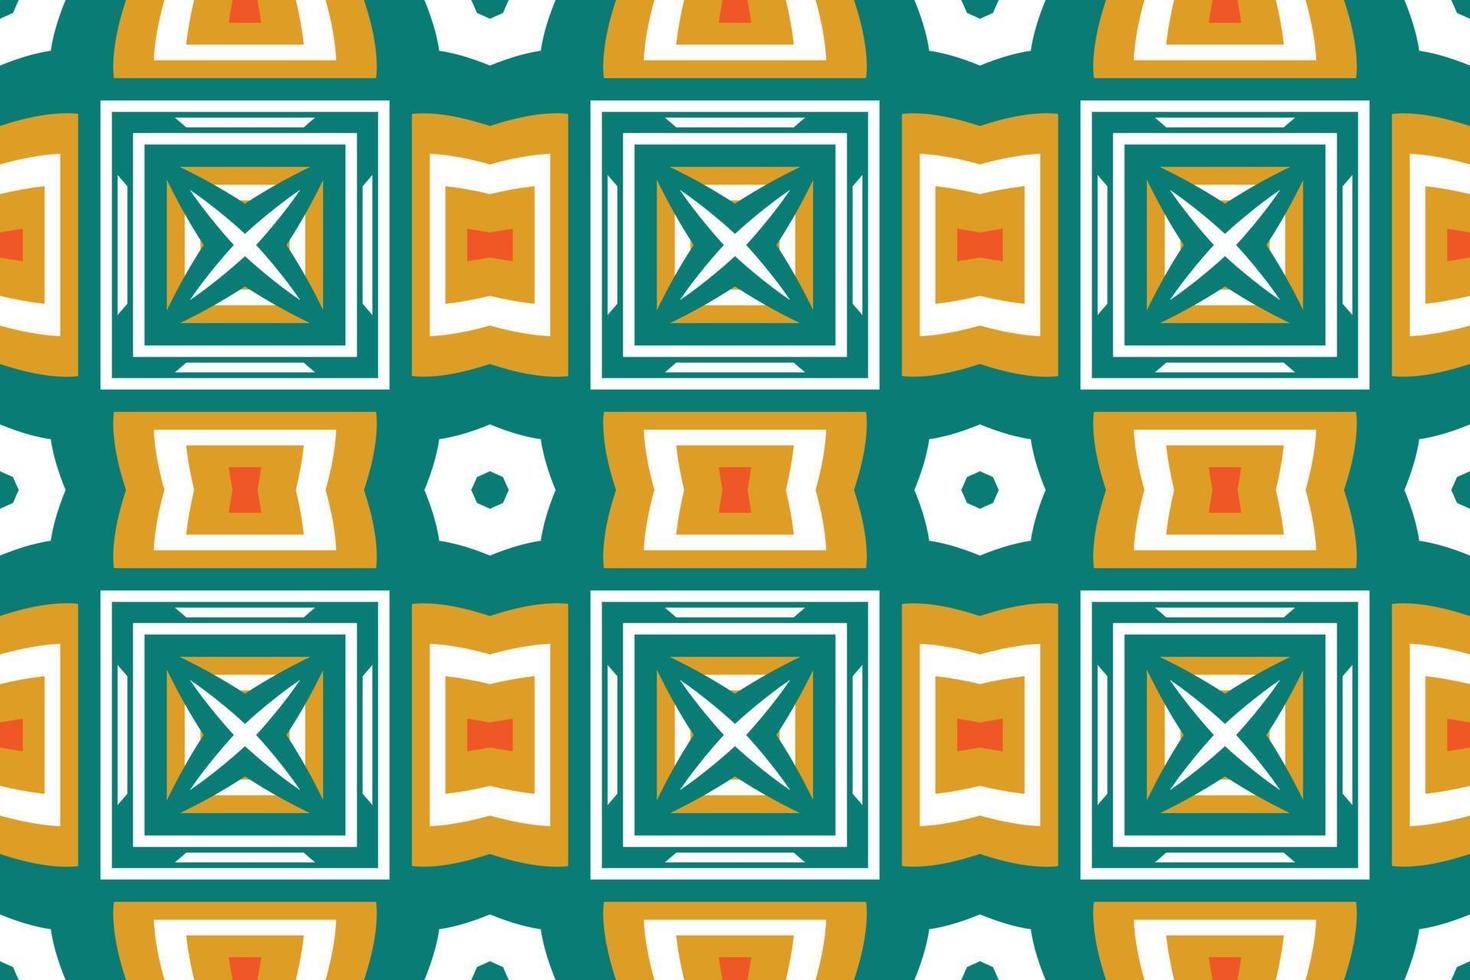 Royal Authentic Obama Kente Fabric Kente Digital Paper African Kente Cloth Woven Fabric Print vector